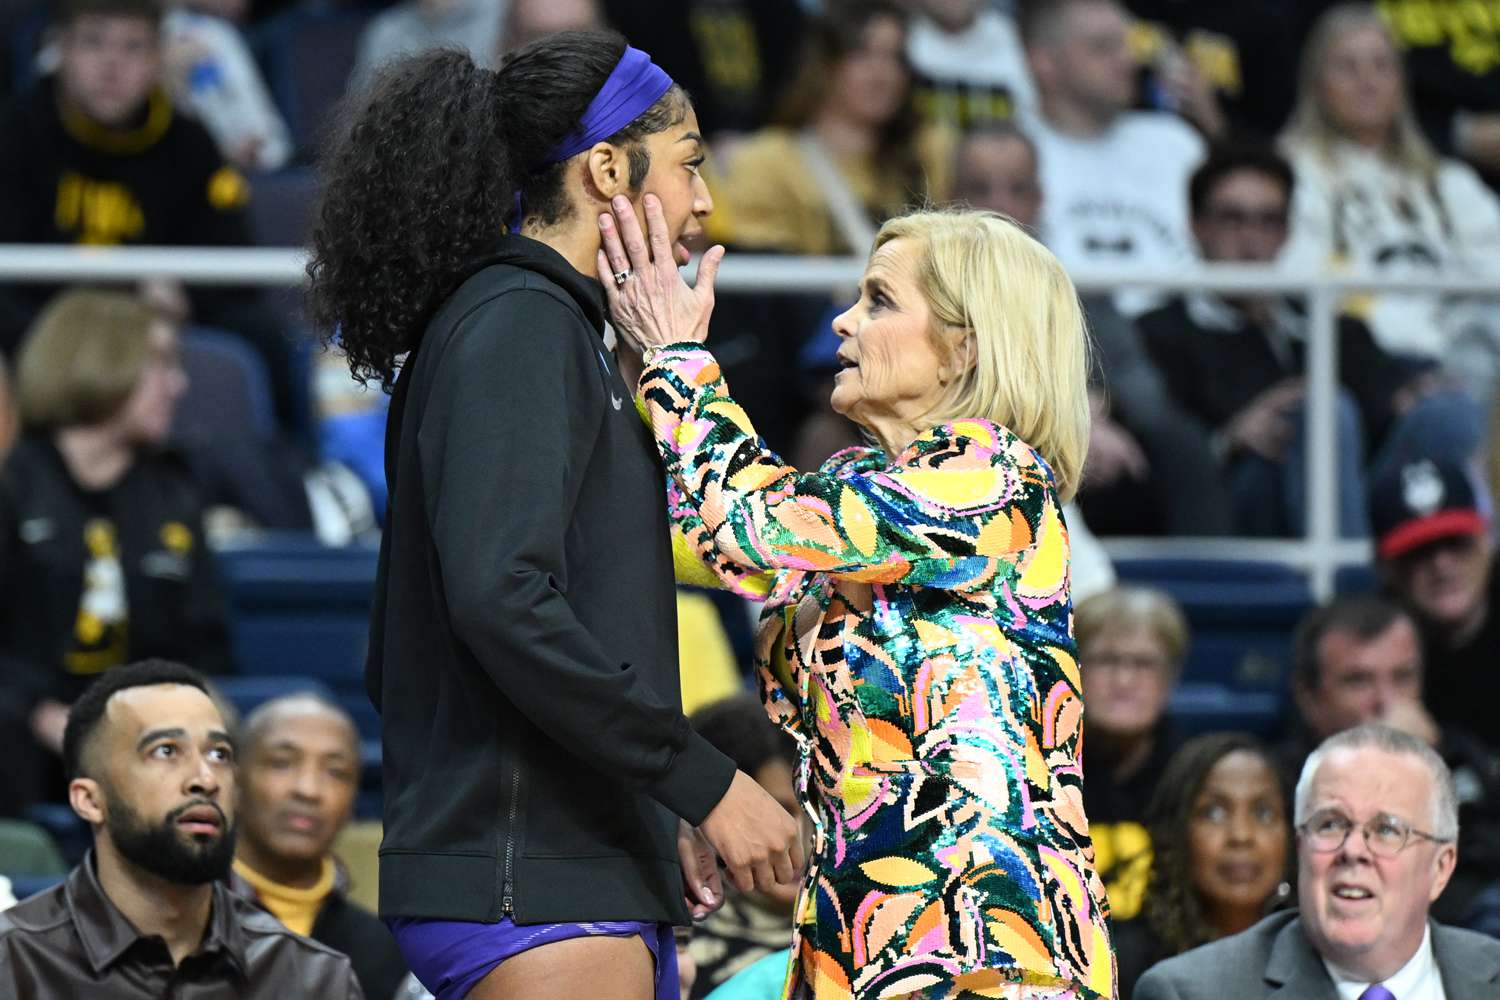 Angel Reese Has Sweet Reunion with LSU Coach Kim Mulkey During Sky-Mystics WNBA Game